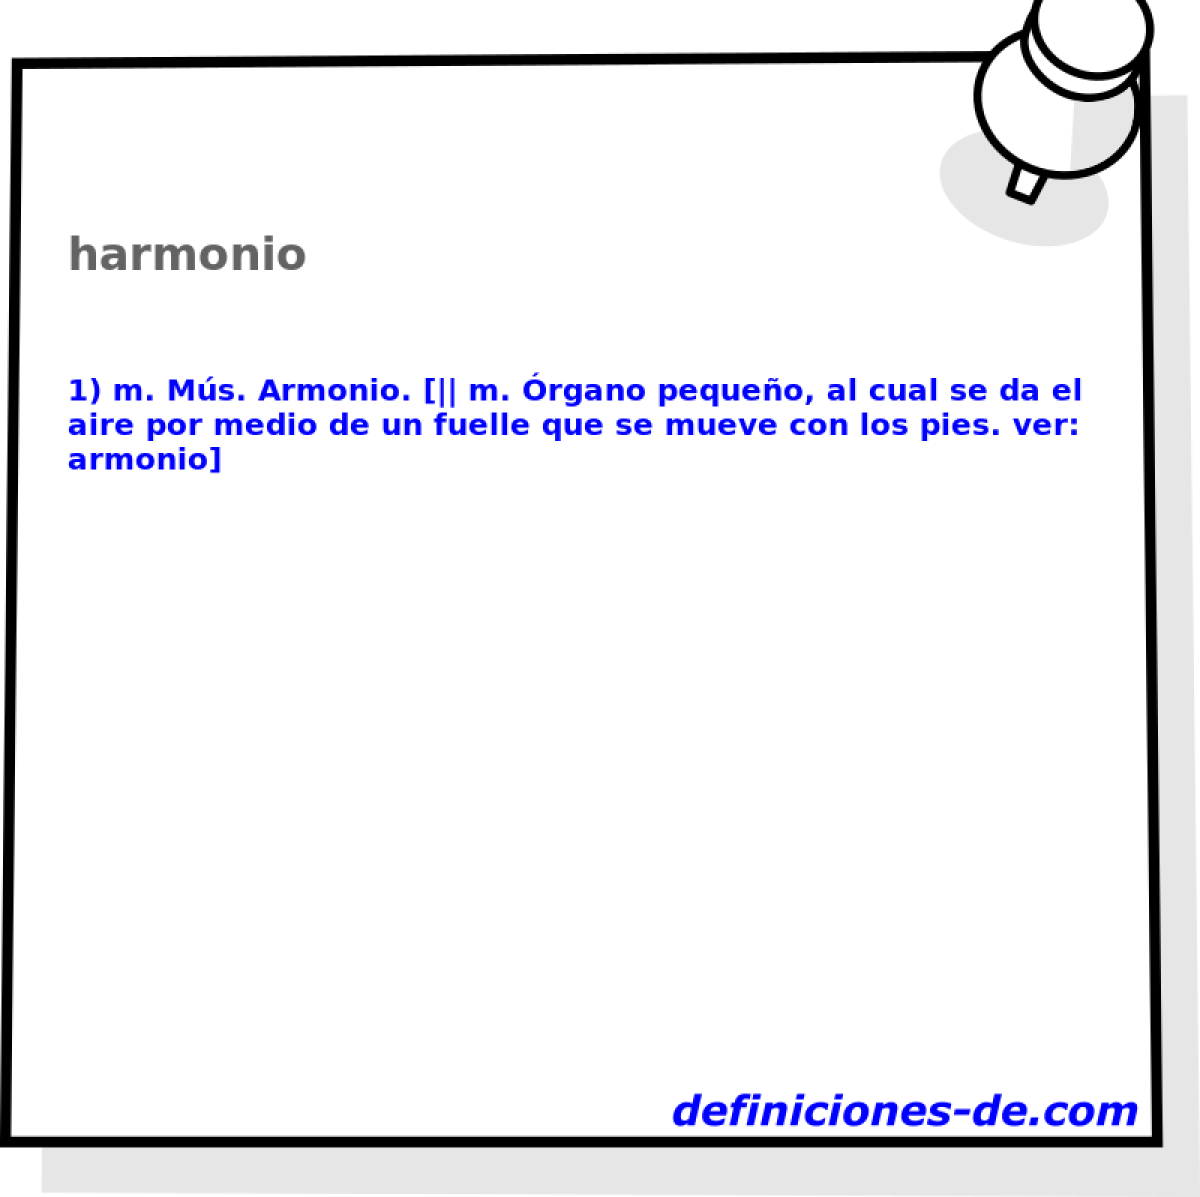 harmonio 